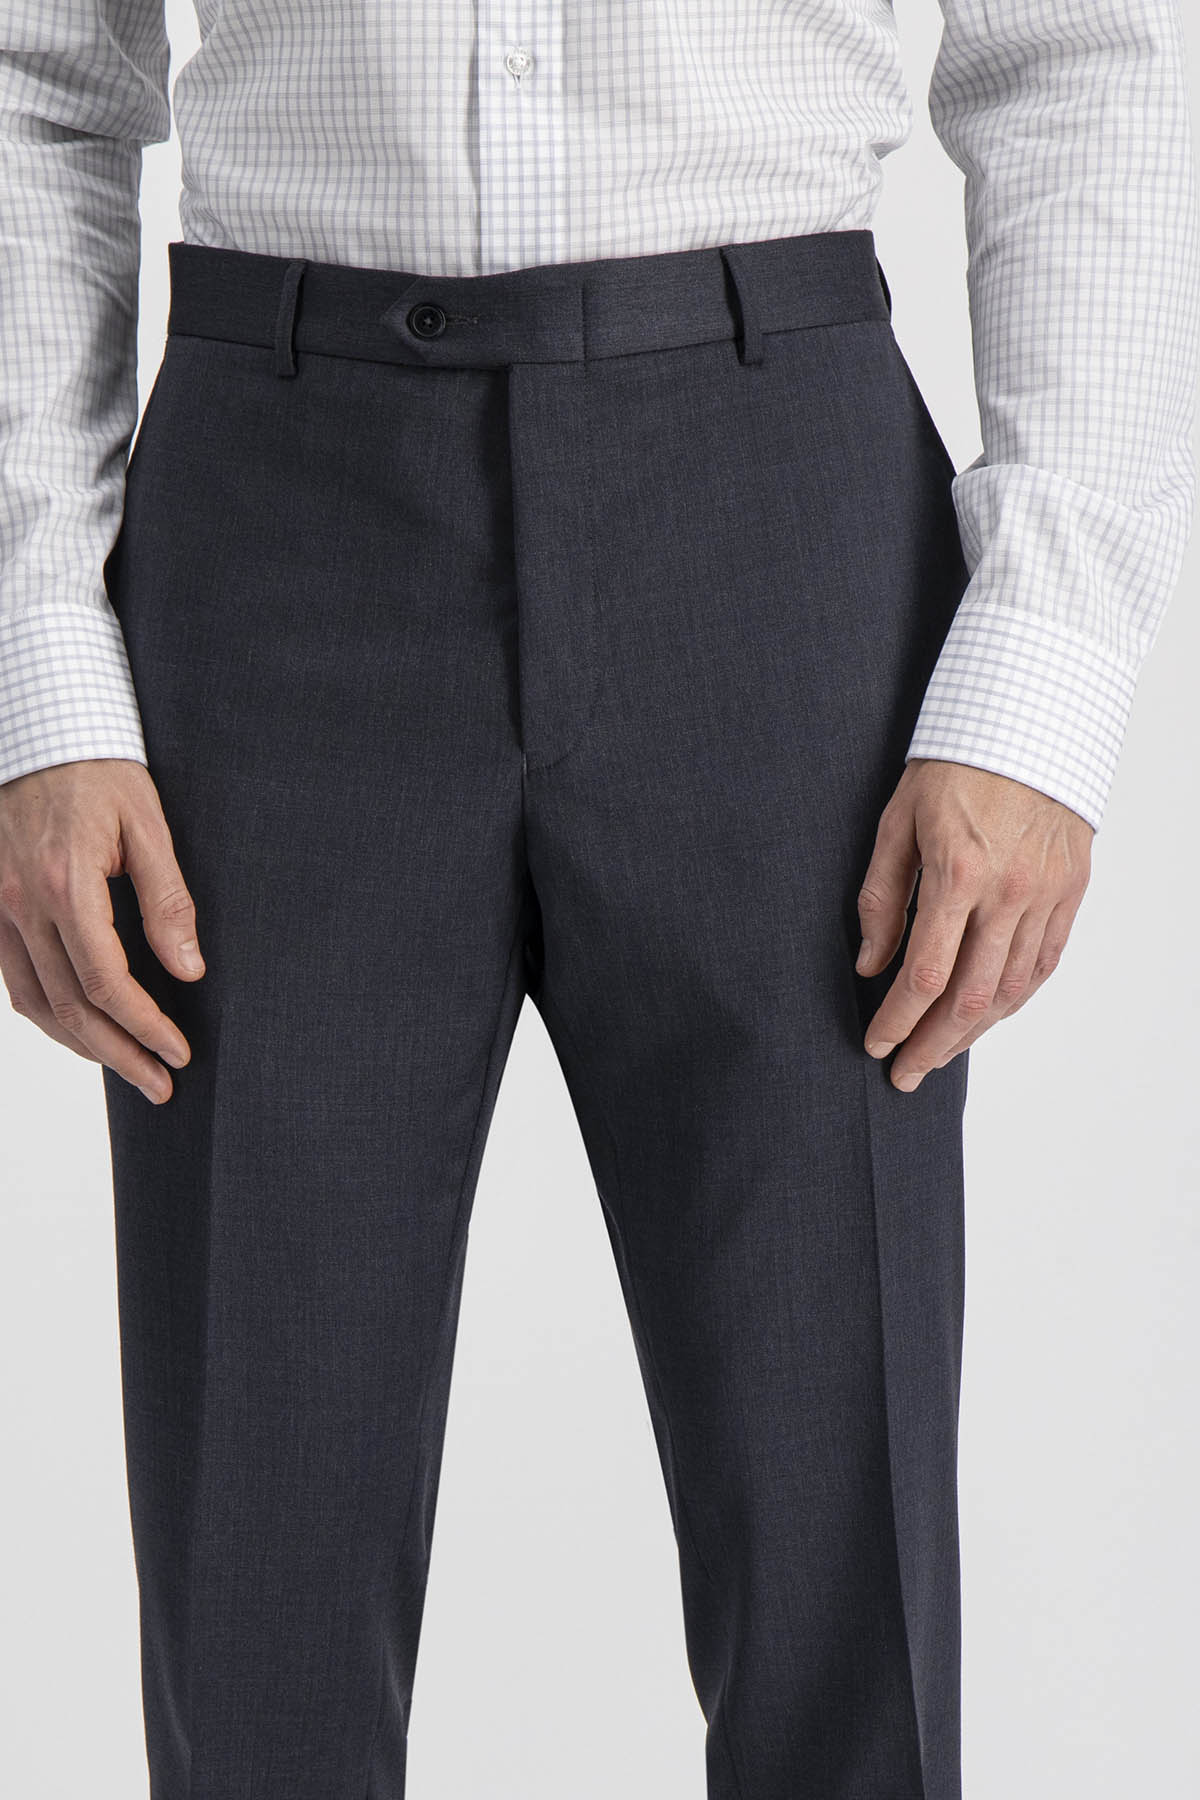 Pantalón Roberts Slim fit Color gris oxford